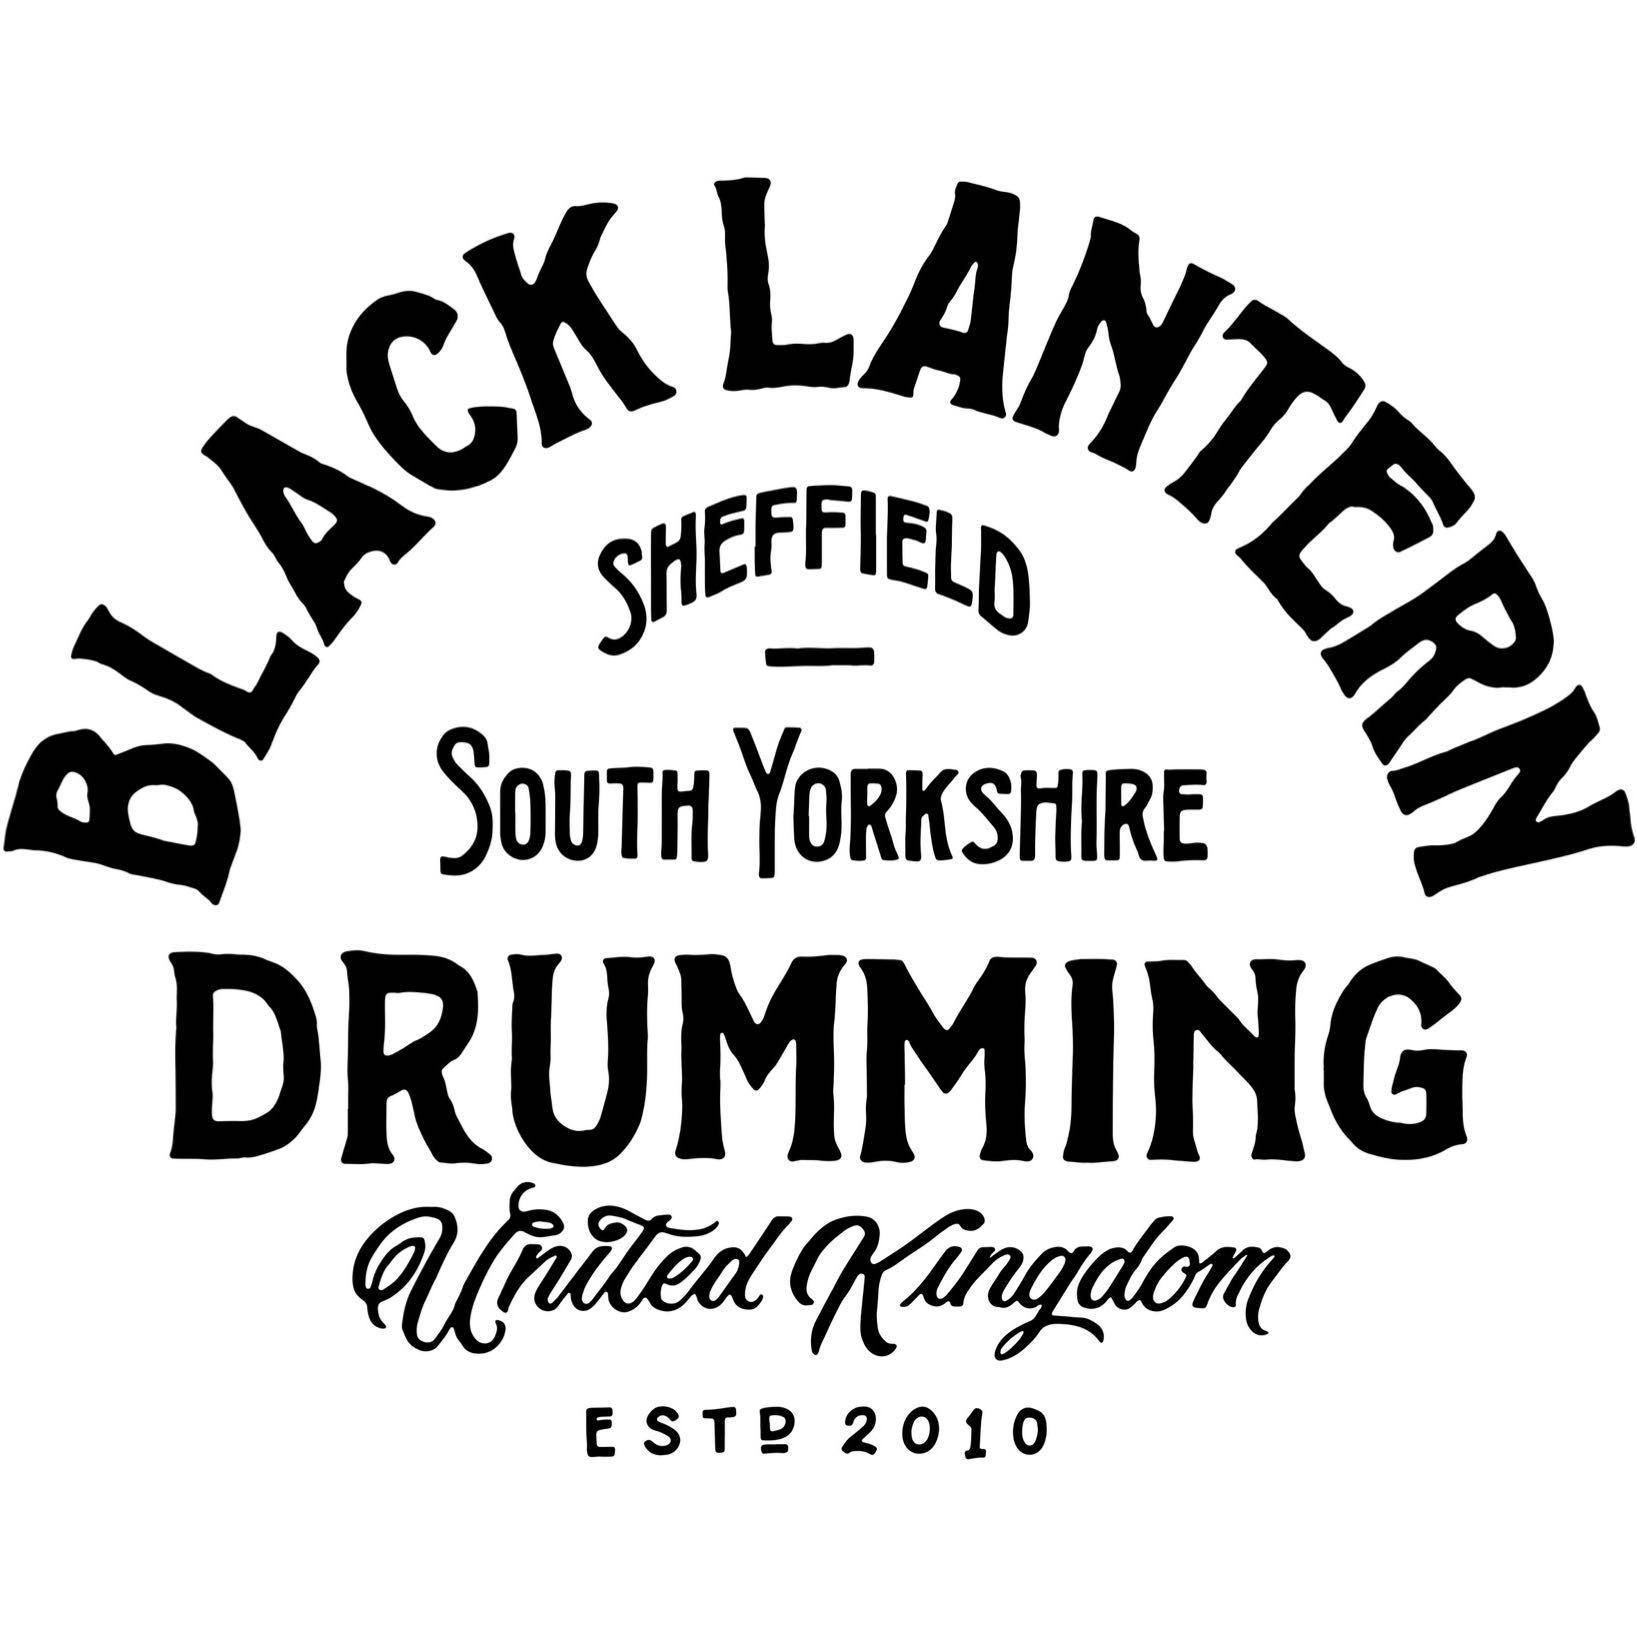 Black Lantern Drum School, Warren St, Darnall, S4 7WT, Sheffield